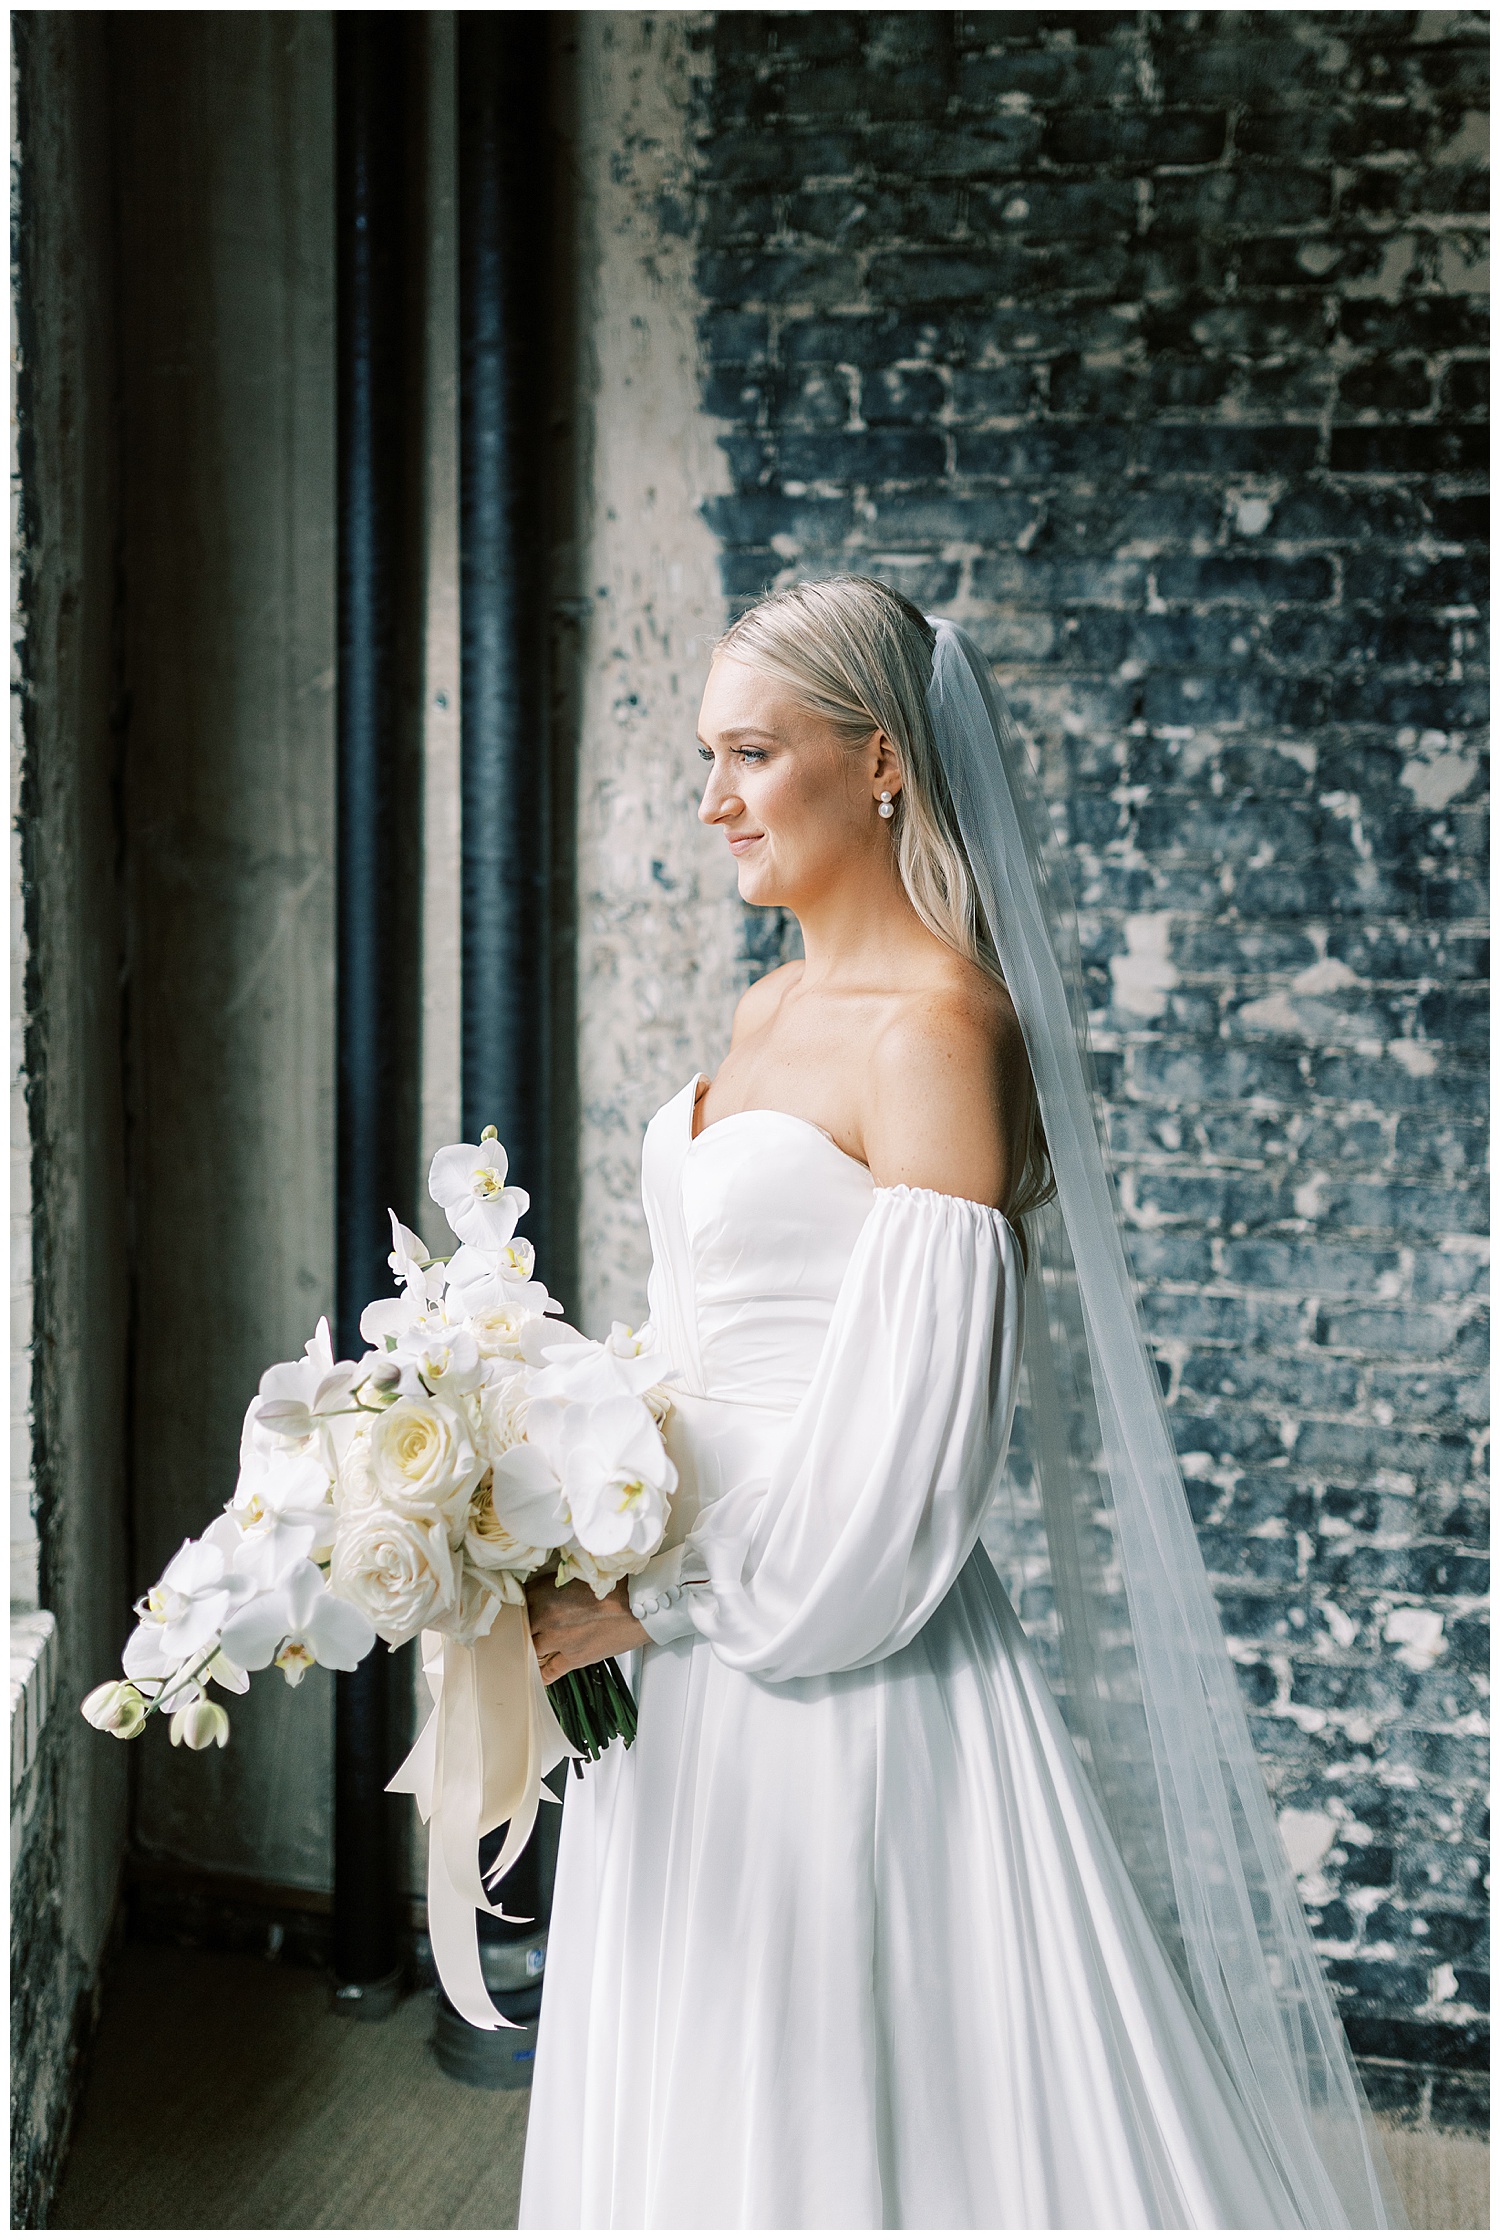 Bridal portrait for Oxford Exchange wedding